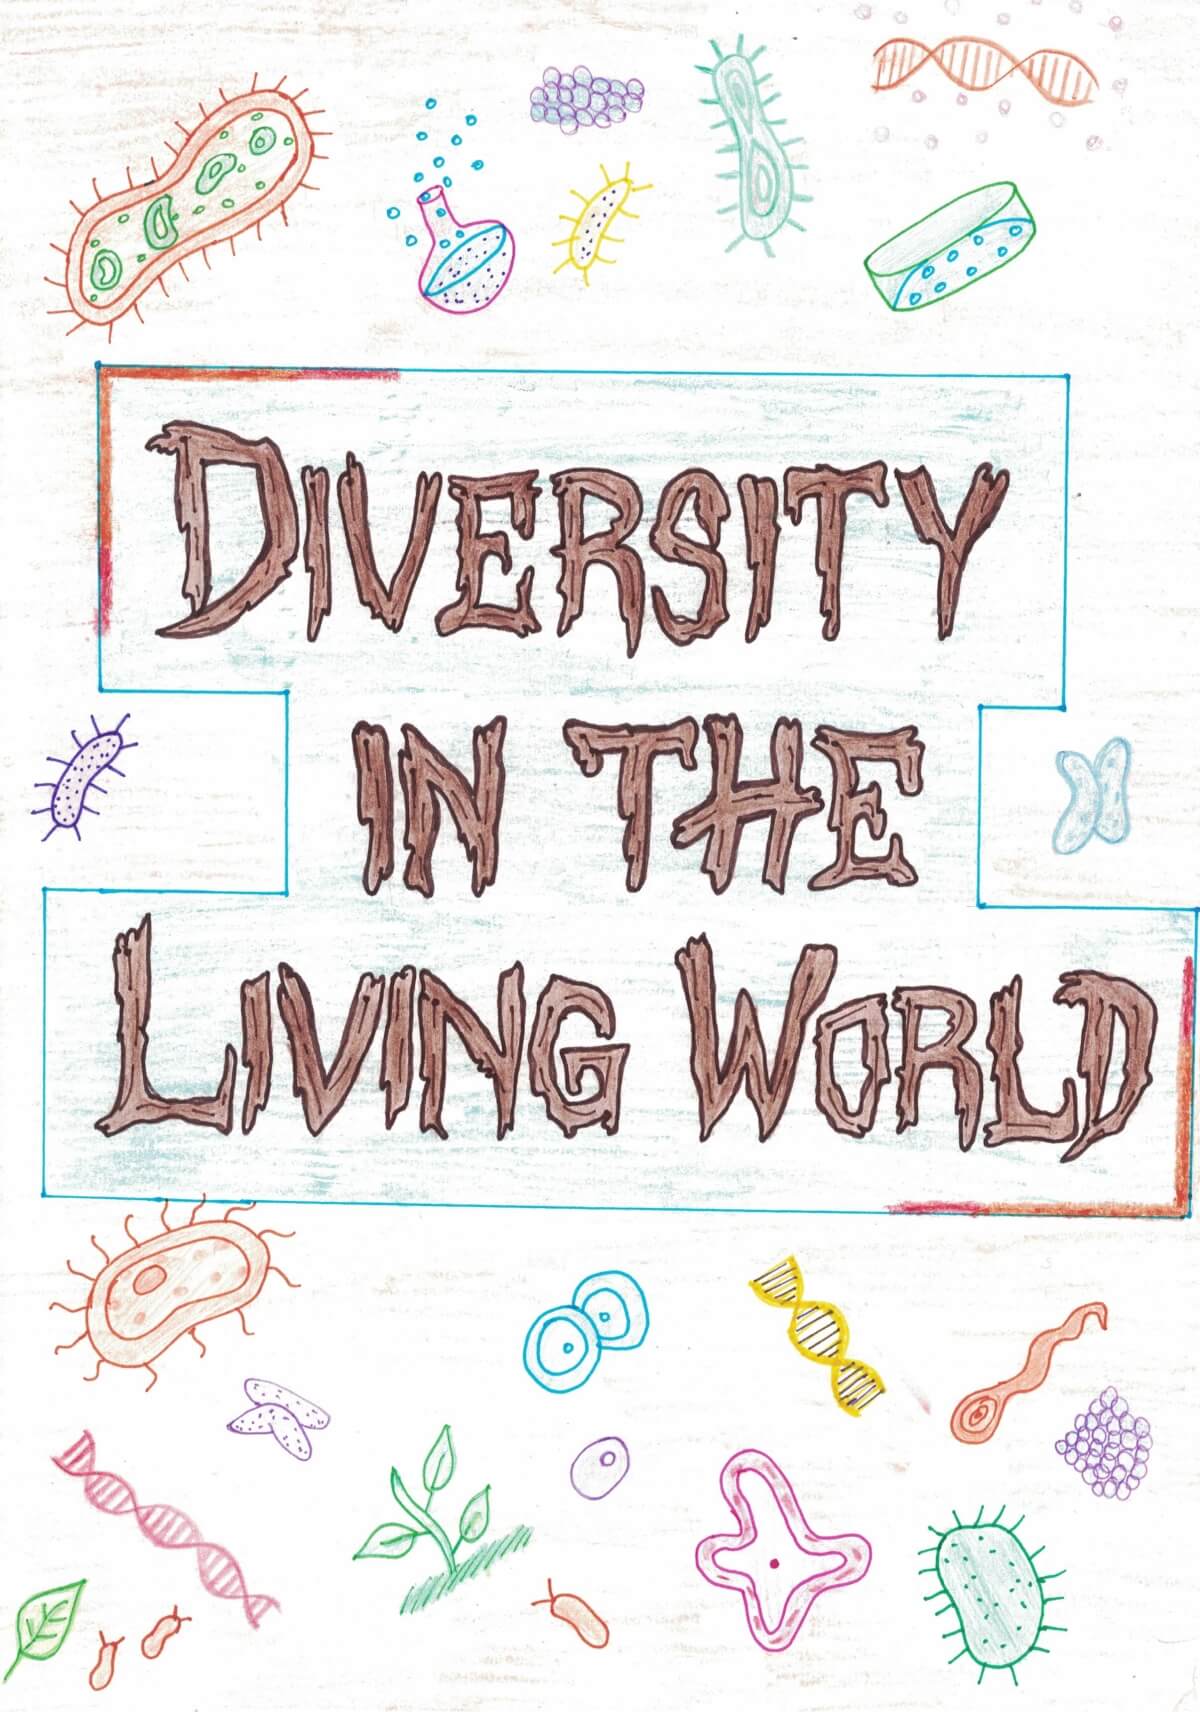 Diversity In The Living World (Class 11) Notes PDF - NEET Biology